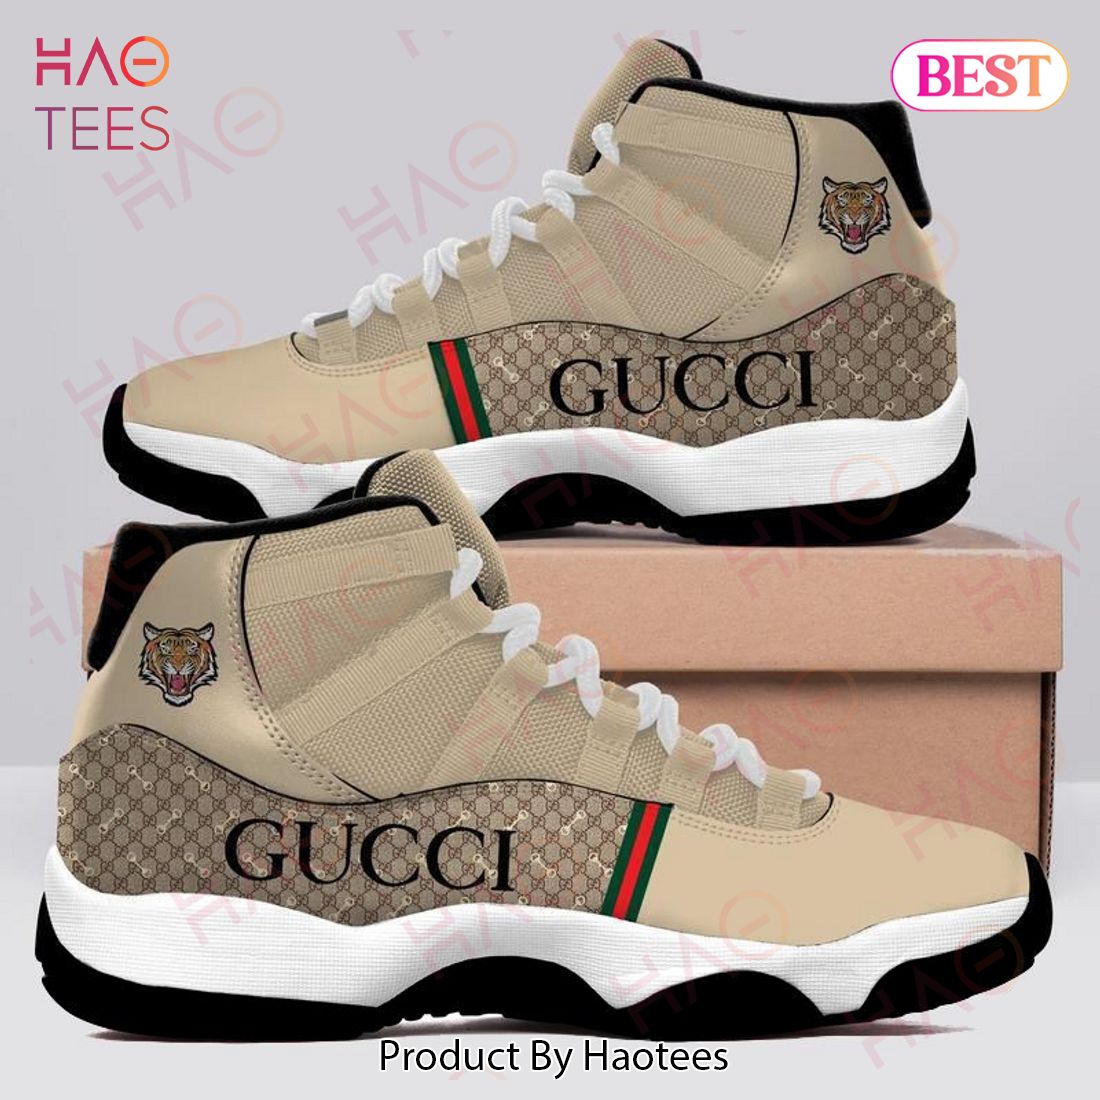 Gucci Tiger Brown Air Jordan 11 Sneakers Shoes Hot 2022 Gifts For Men Women